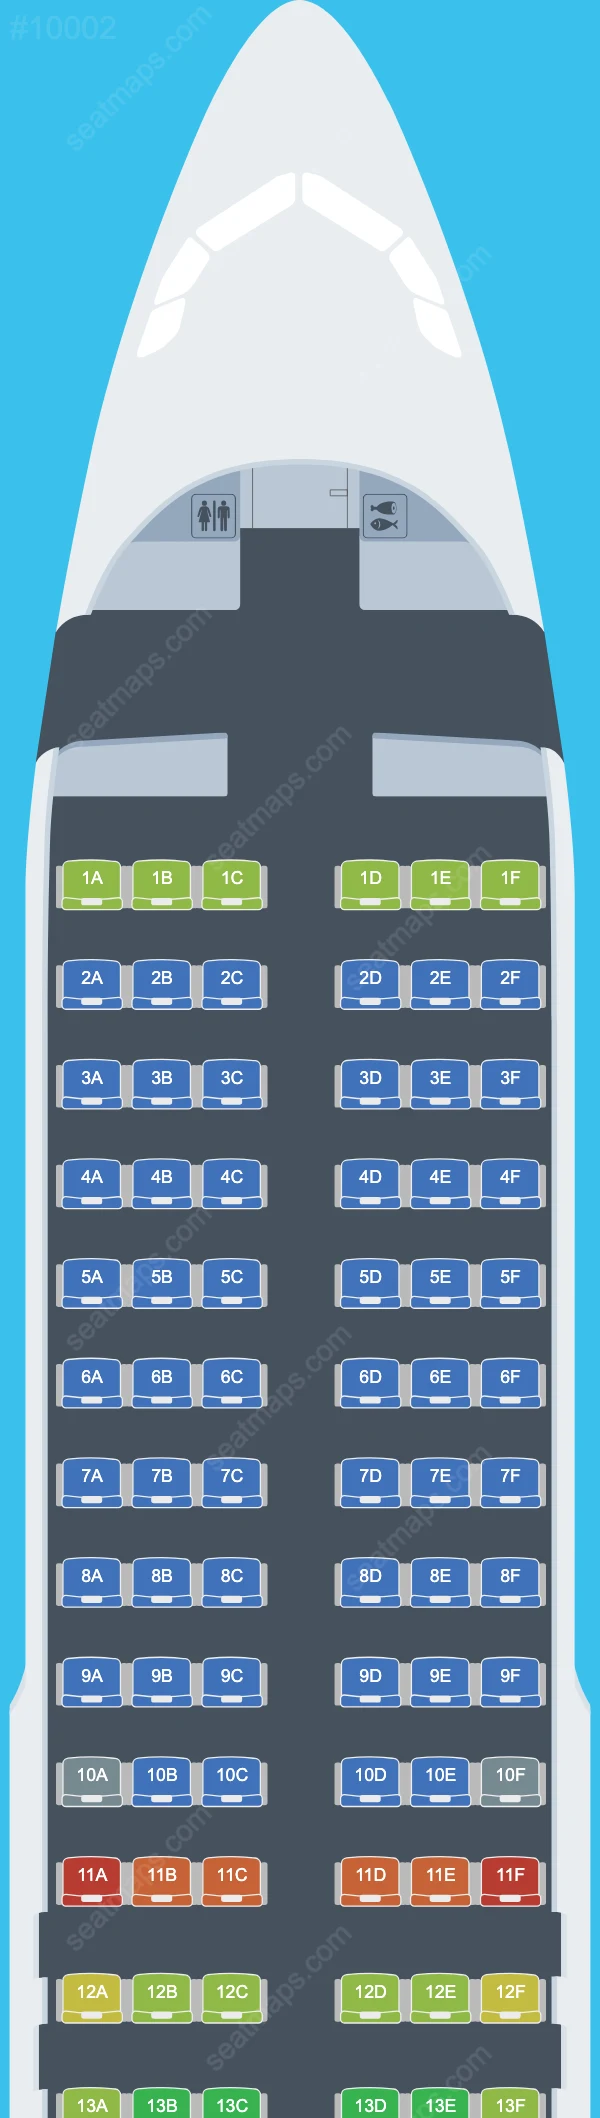 Smartavia Airbus A320 Seat Maps A320-200neo